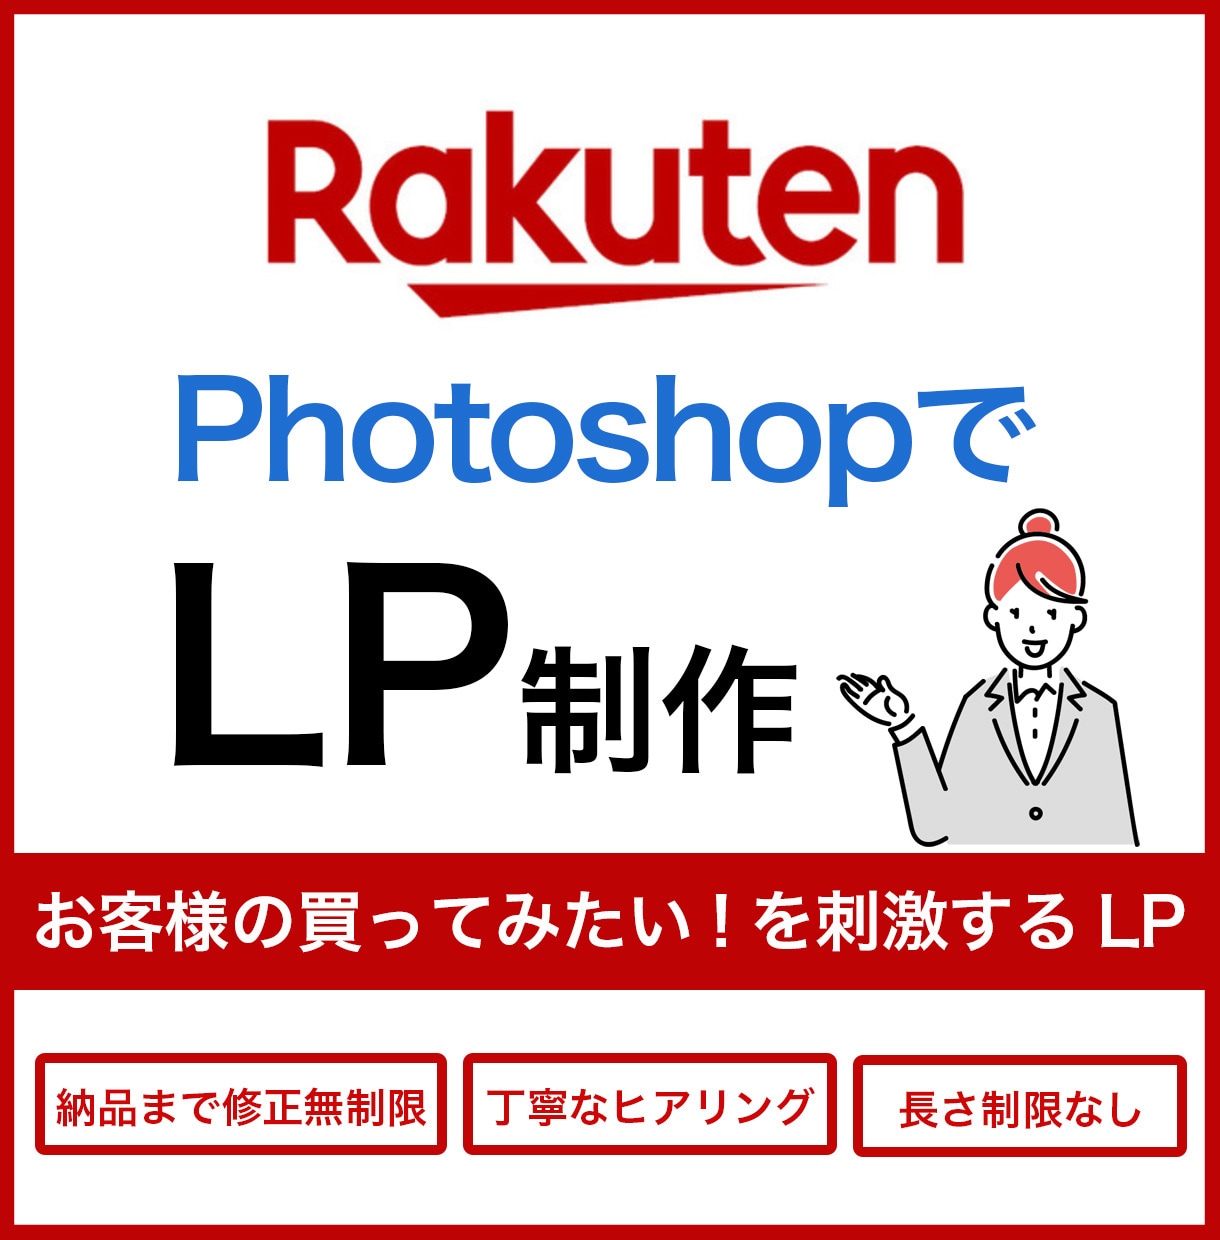 Rakuten PhotoshopでLP制作します お客様ので買いたい！を刺激するLP制作します！ イメージ1